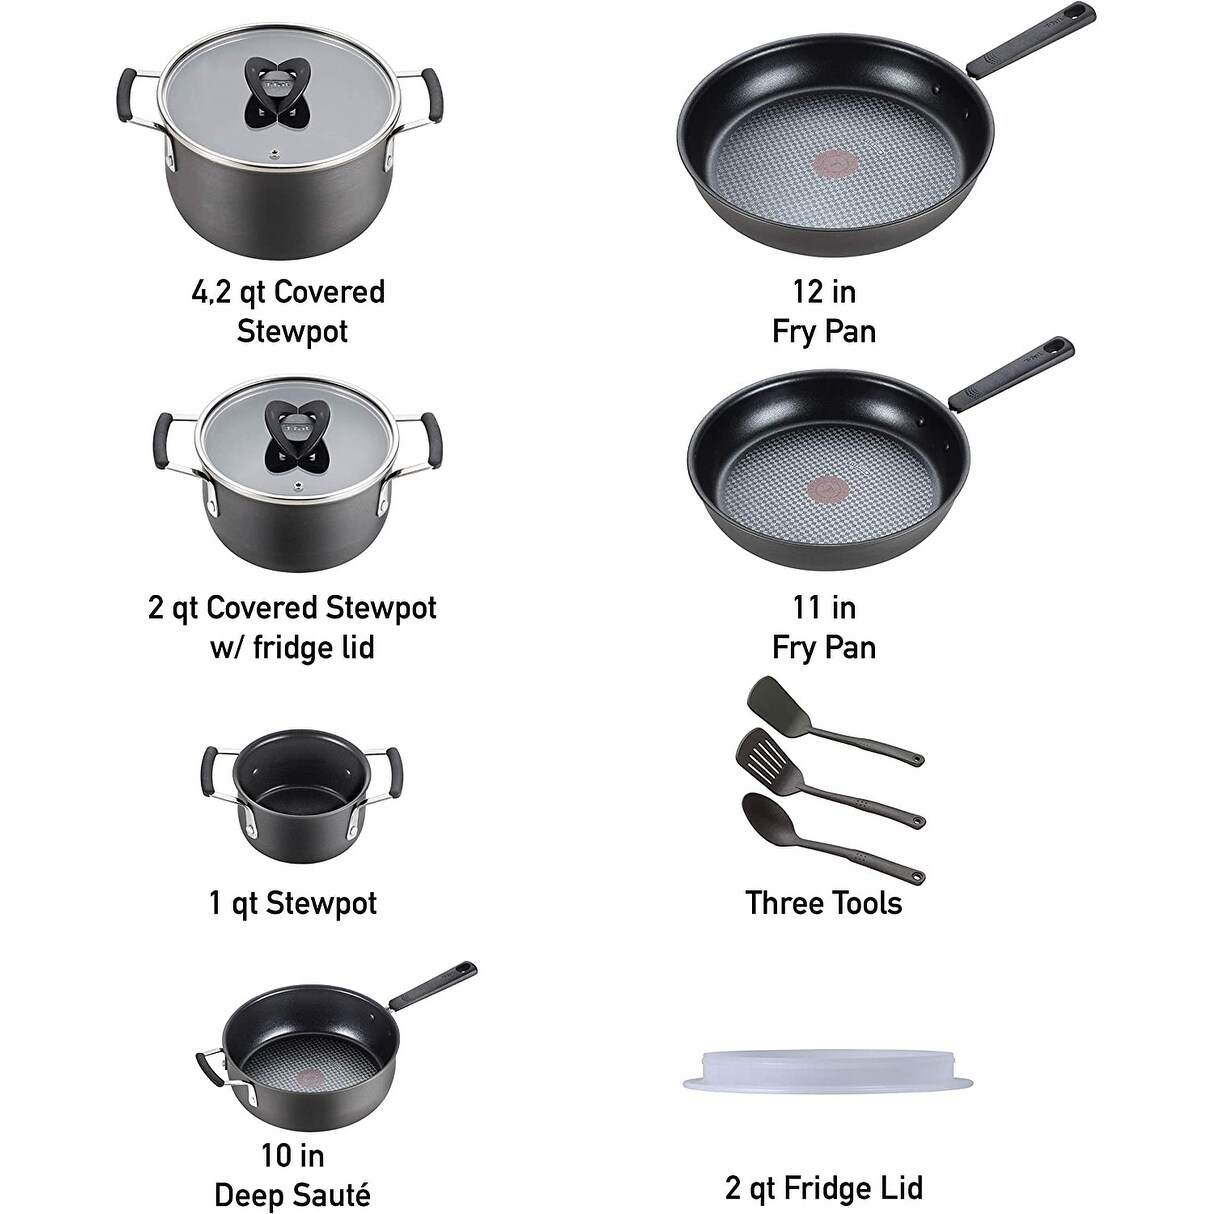 T-Fal Forged Titanium Advanced Non-Stick 12-Piece Cookware Set, Black